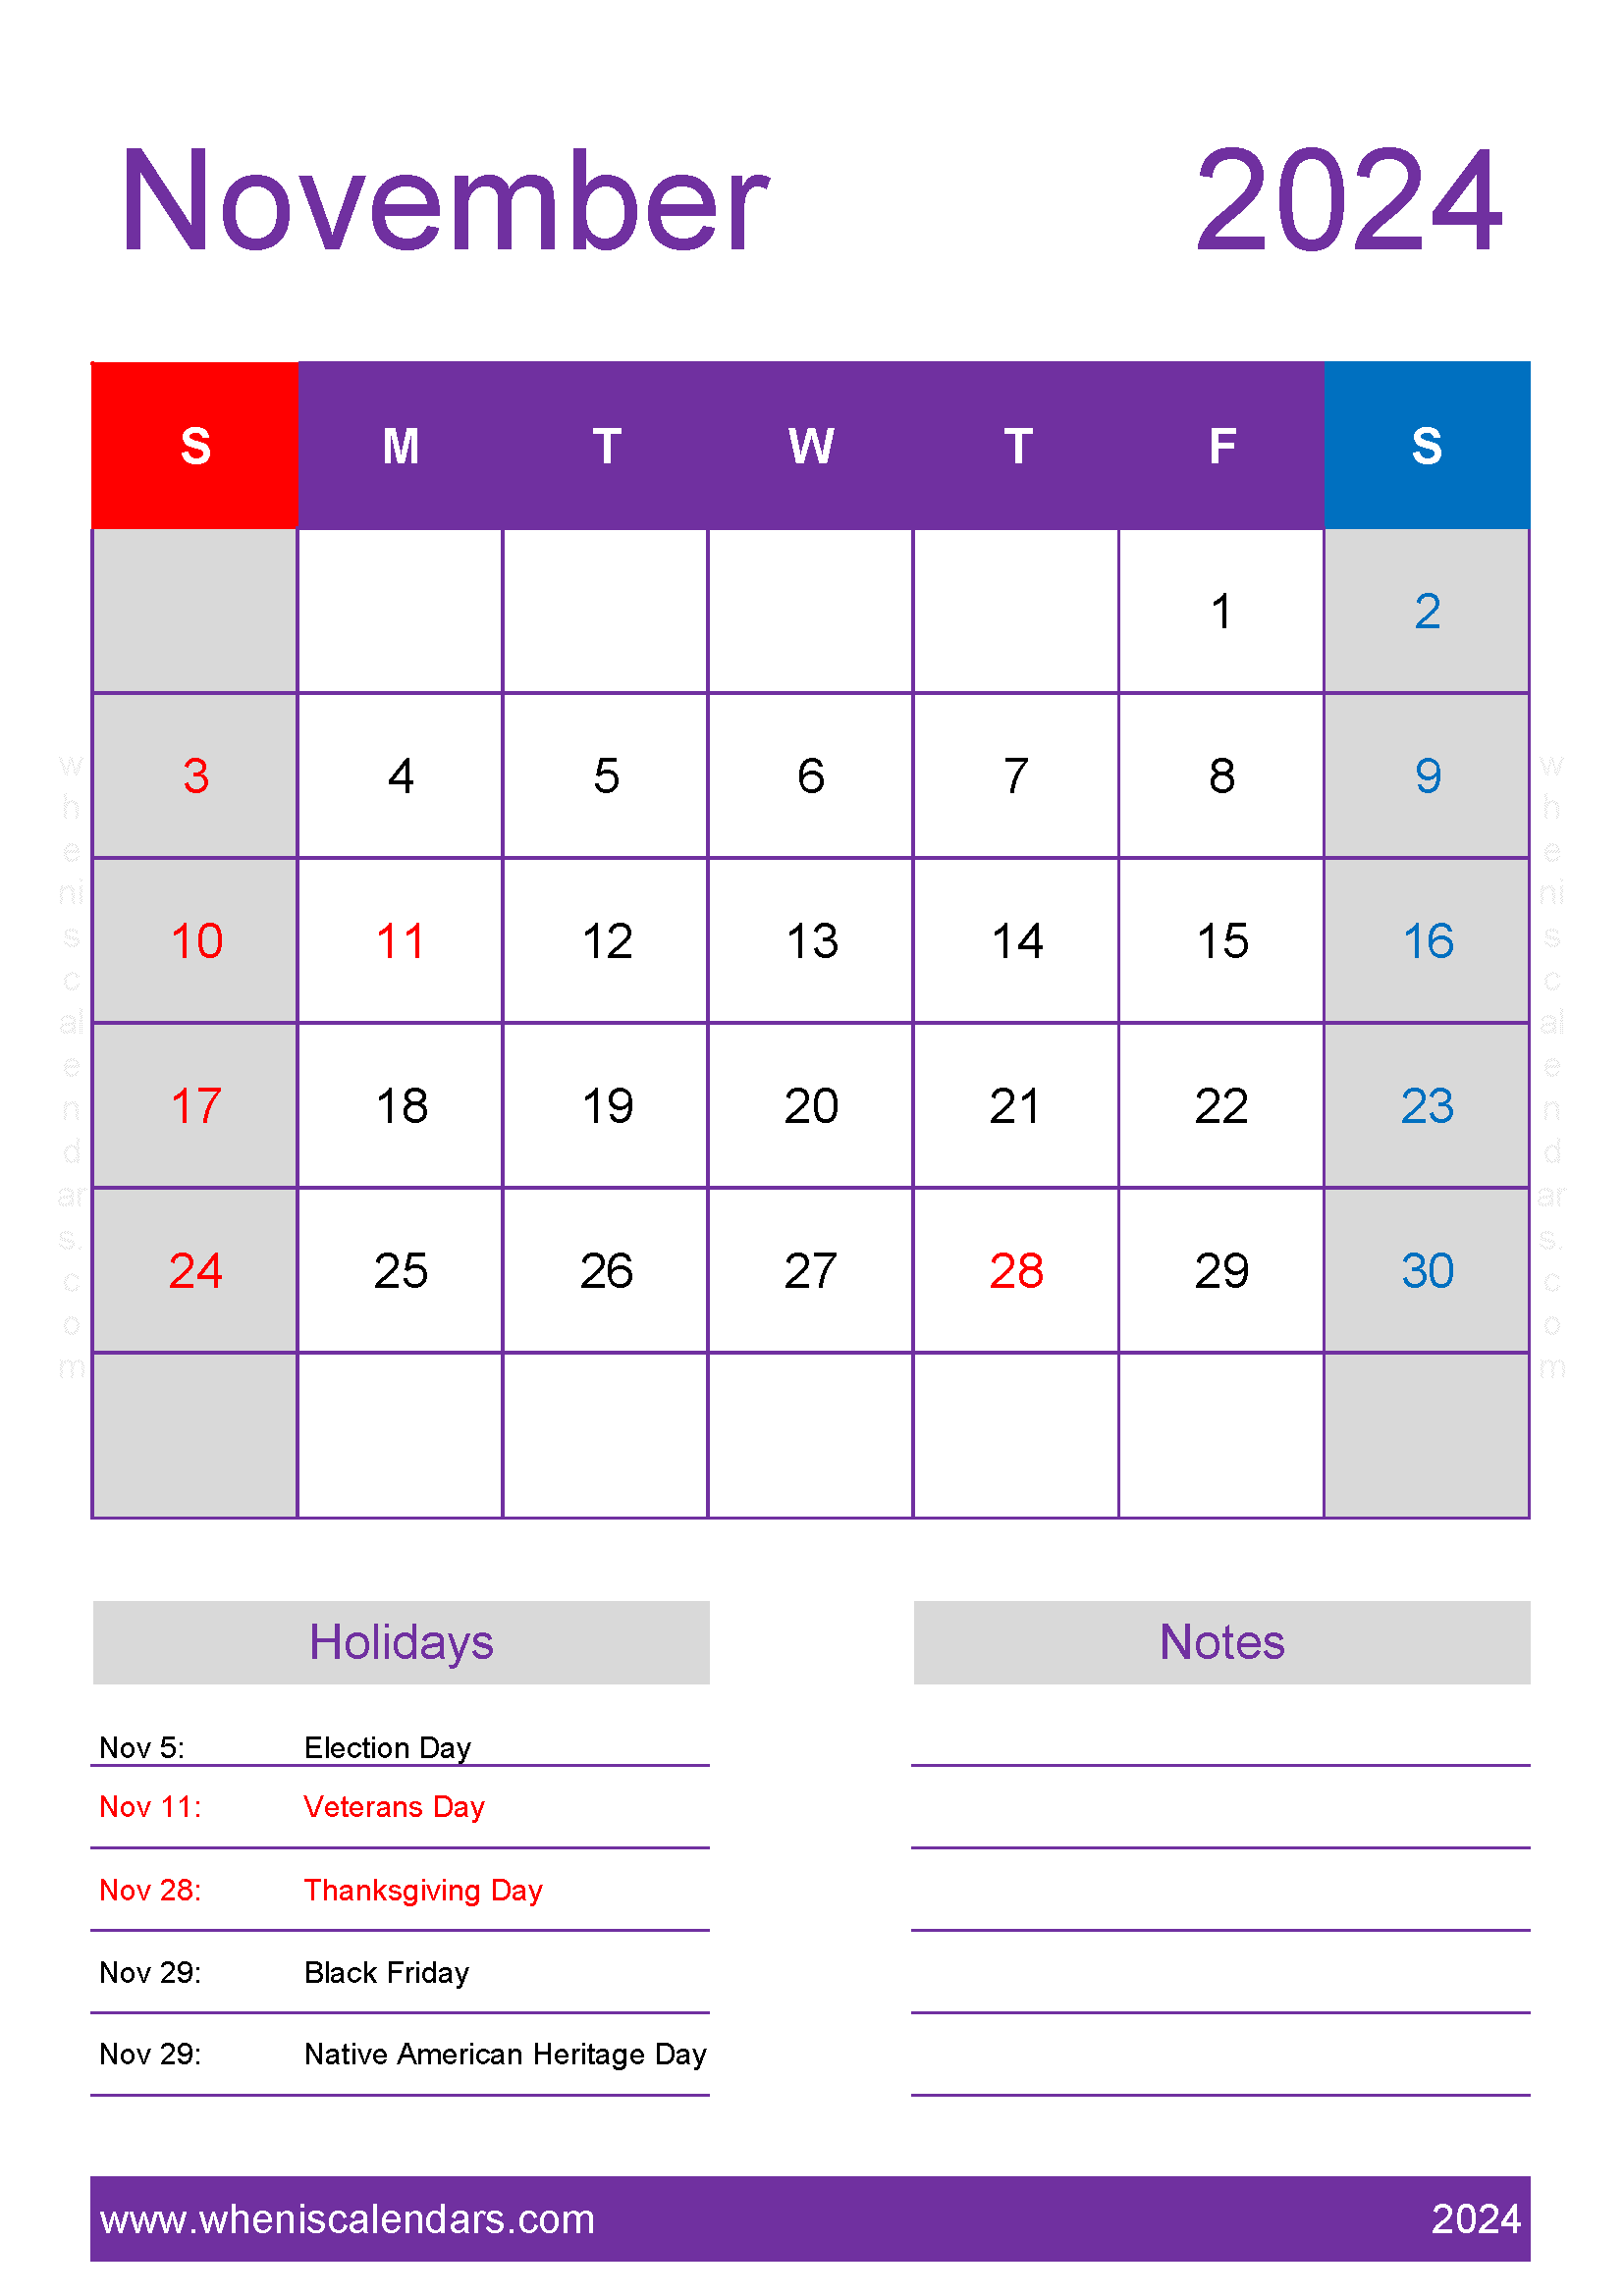 November 2024 Calendar in excel Monthly Calendar